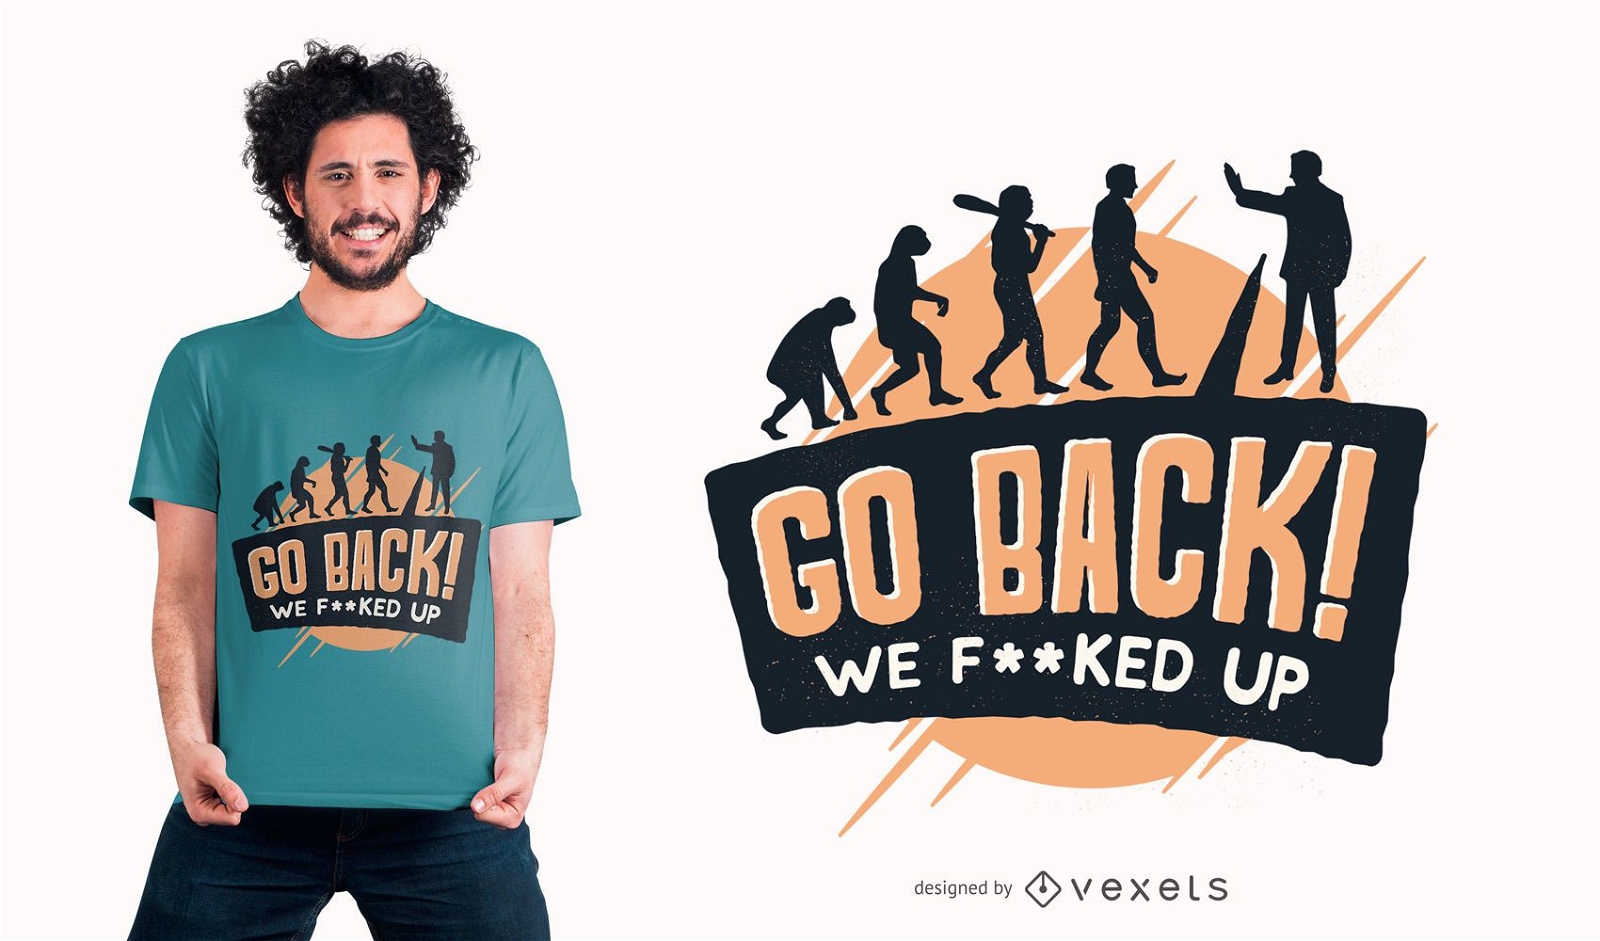 Go back t-shirt design